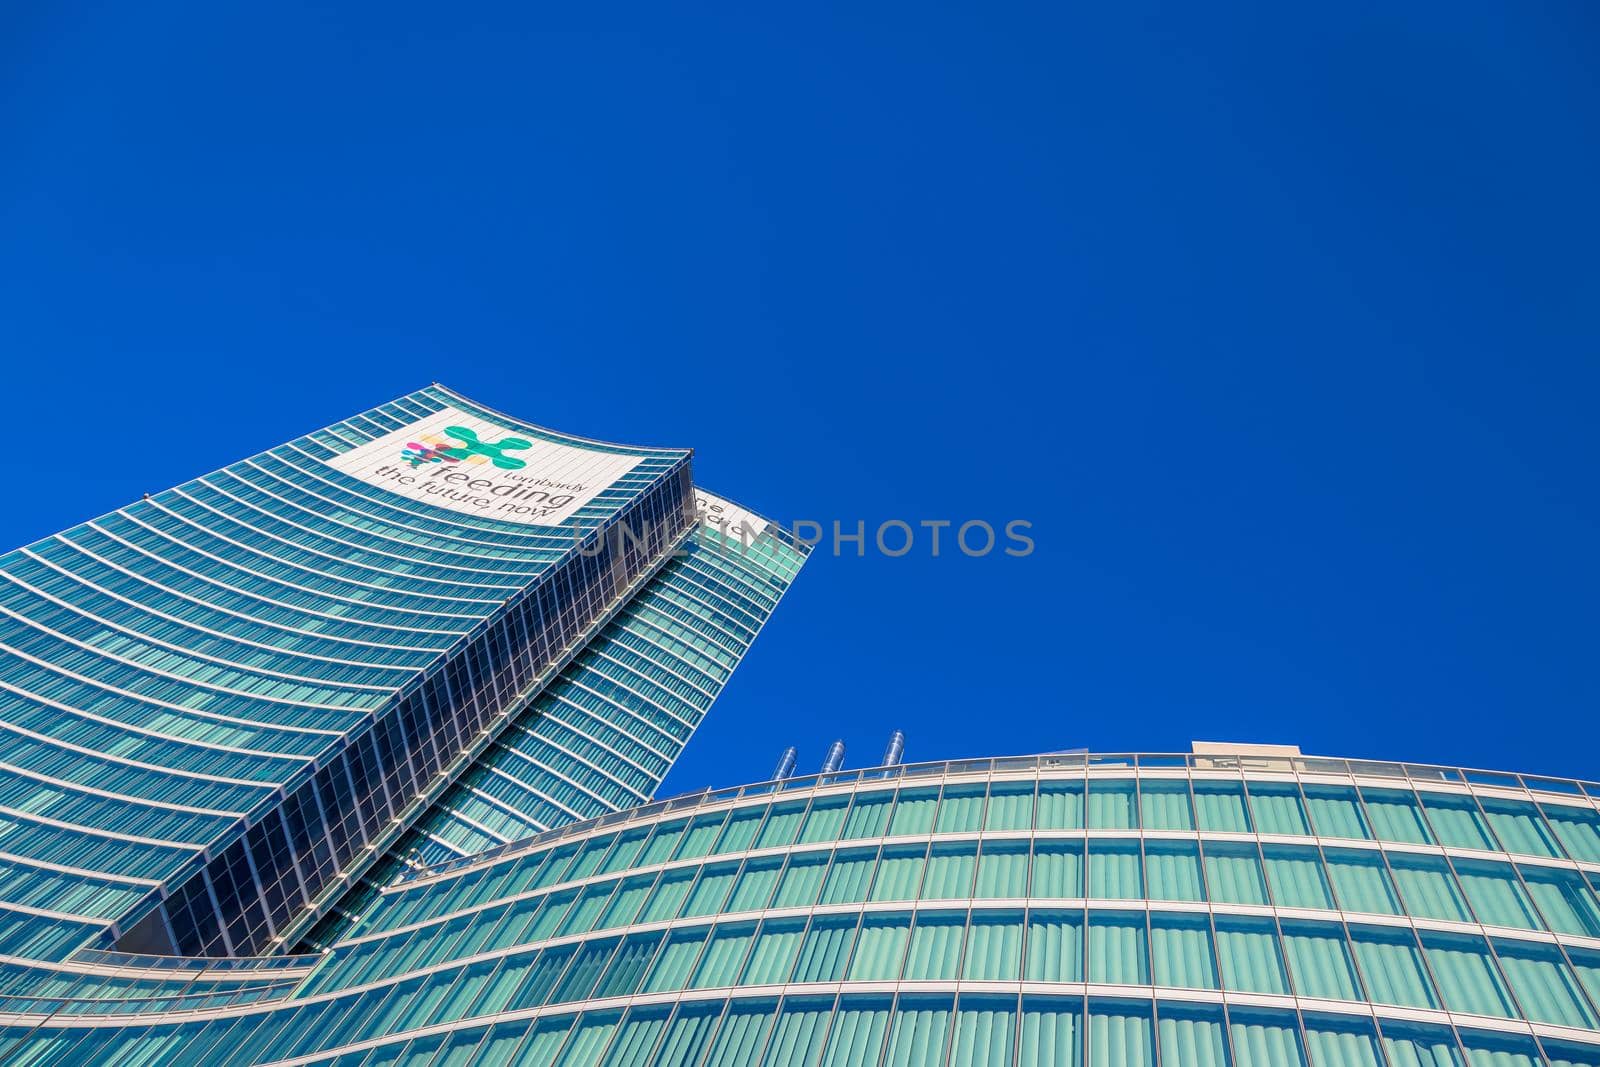 Lombardia (Lombardy) Region famous skyscraper in Milan, Italy by Perseomedusa